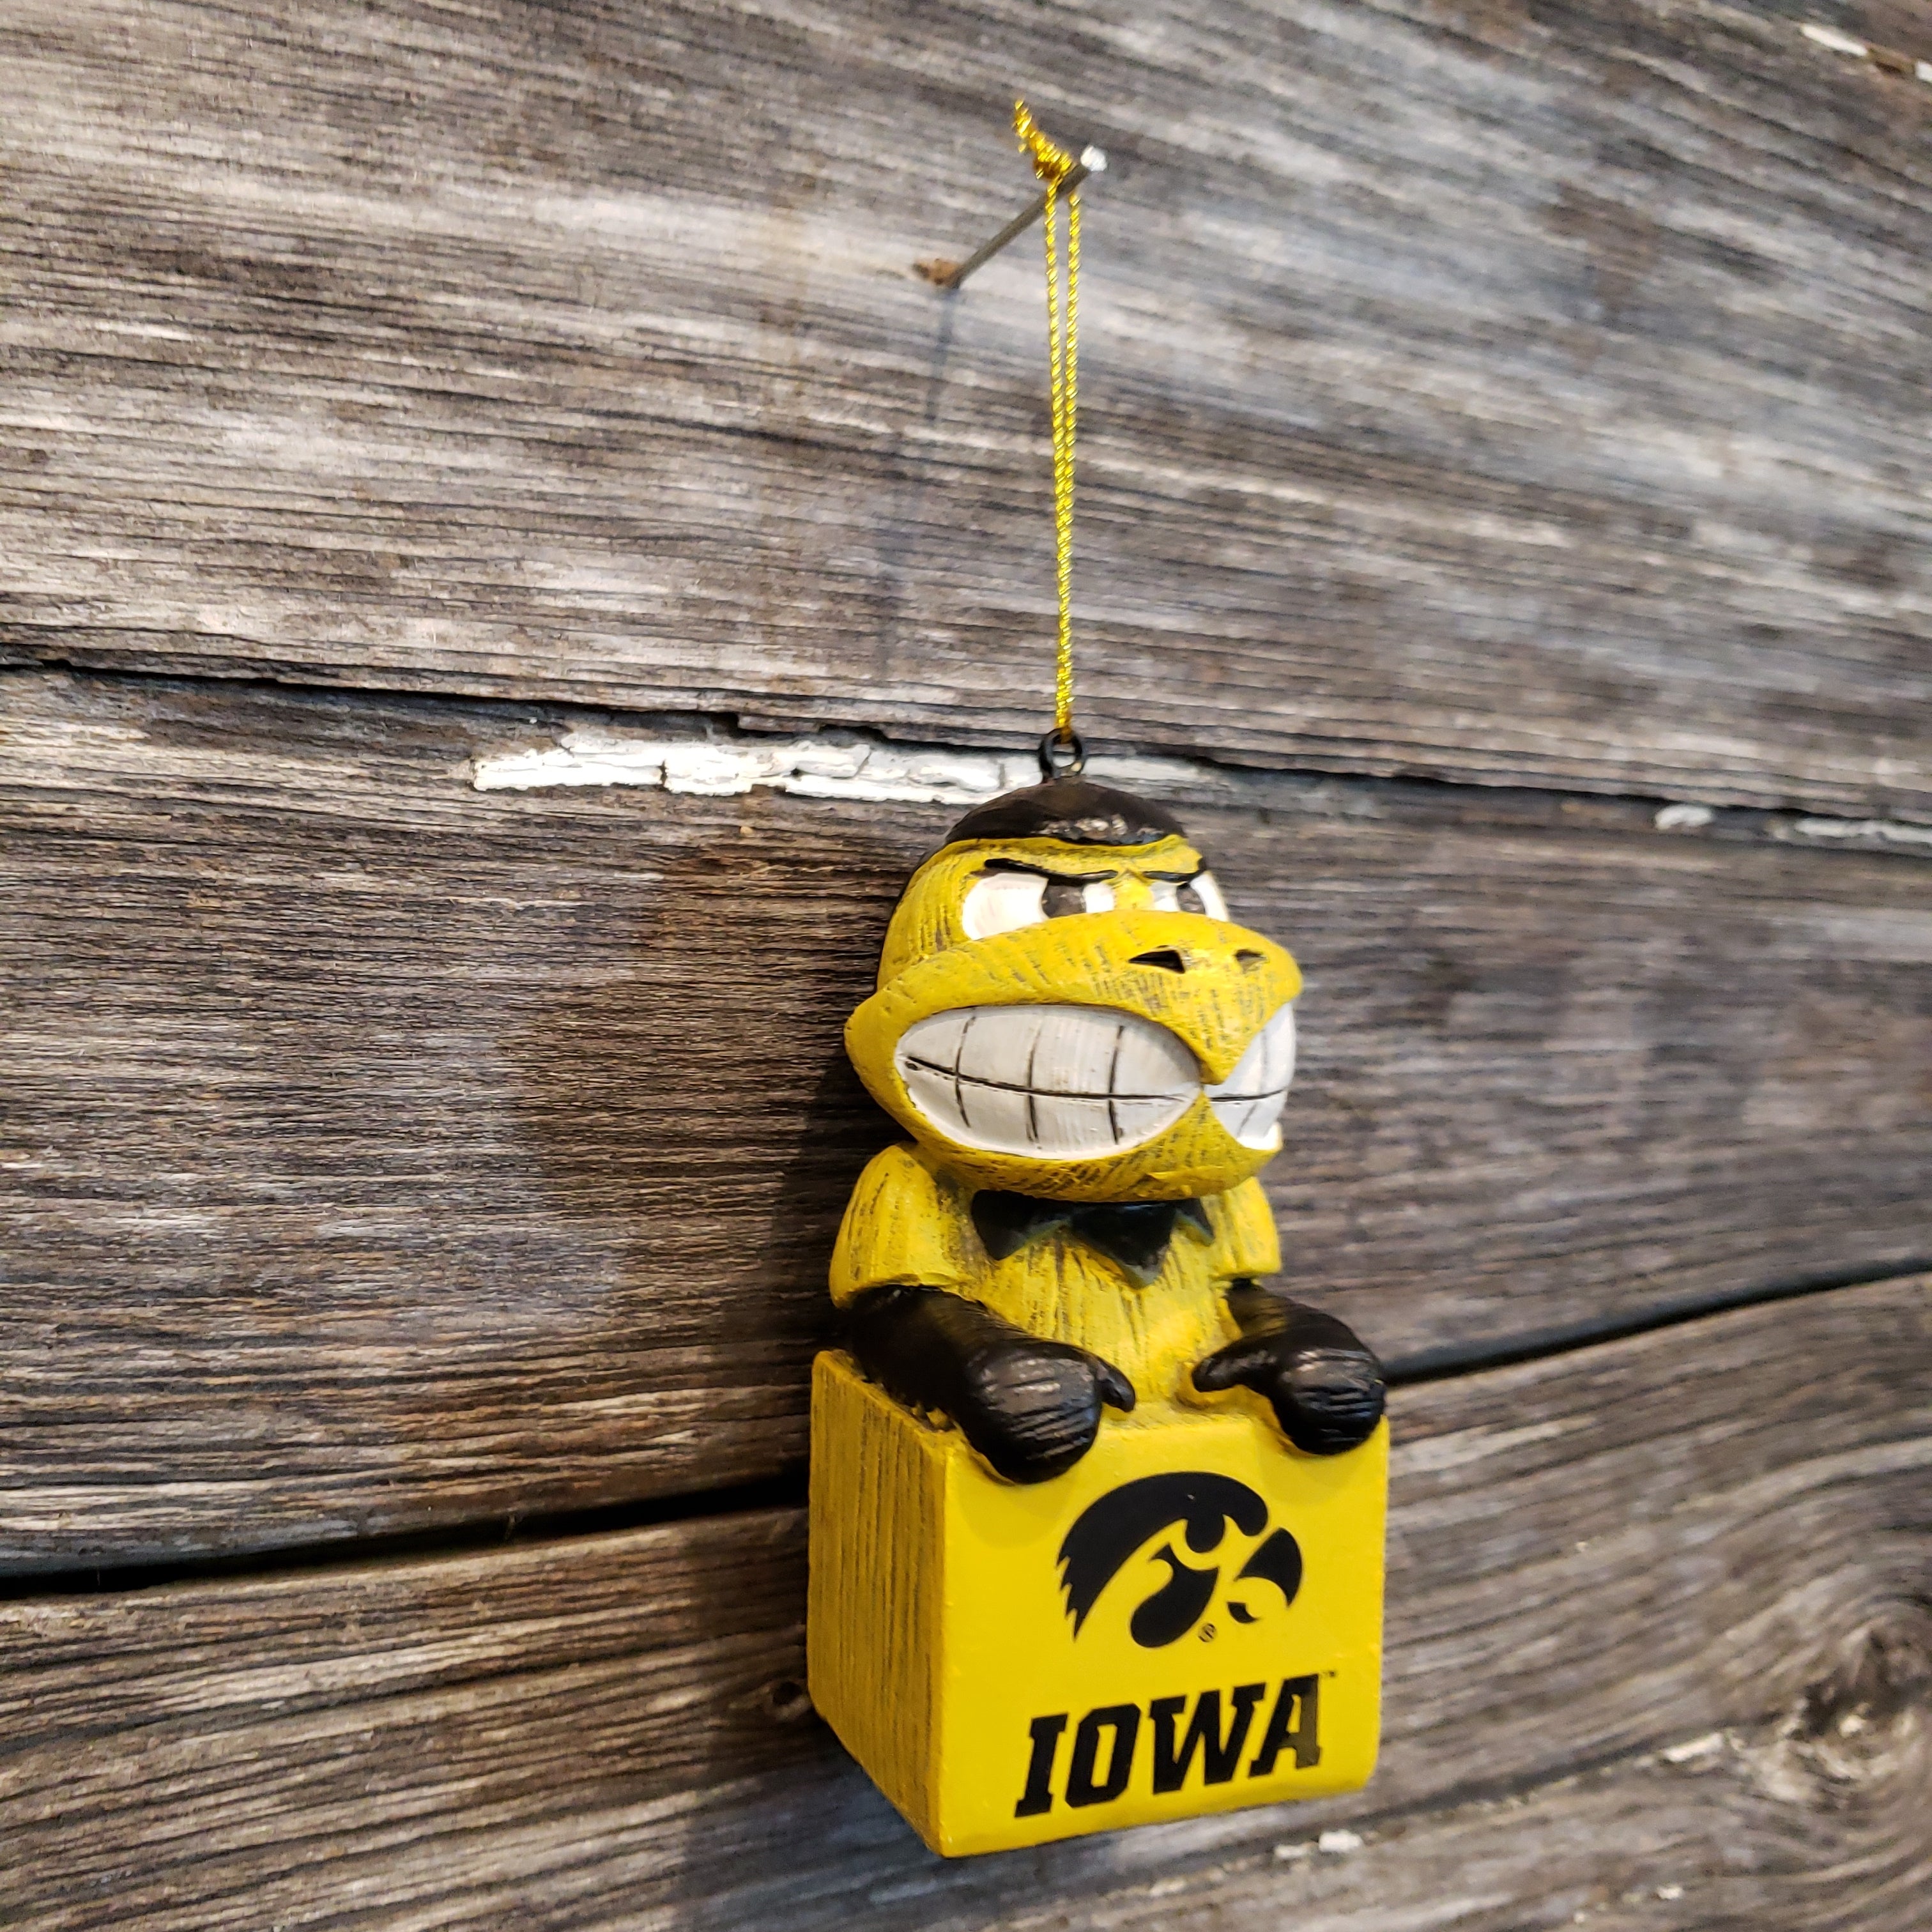 Iowa hawekeye mascot ornament